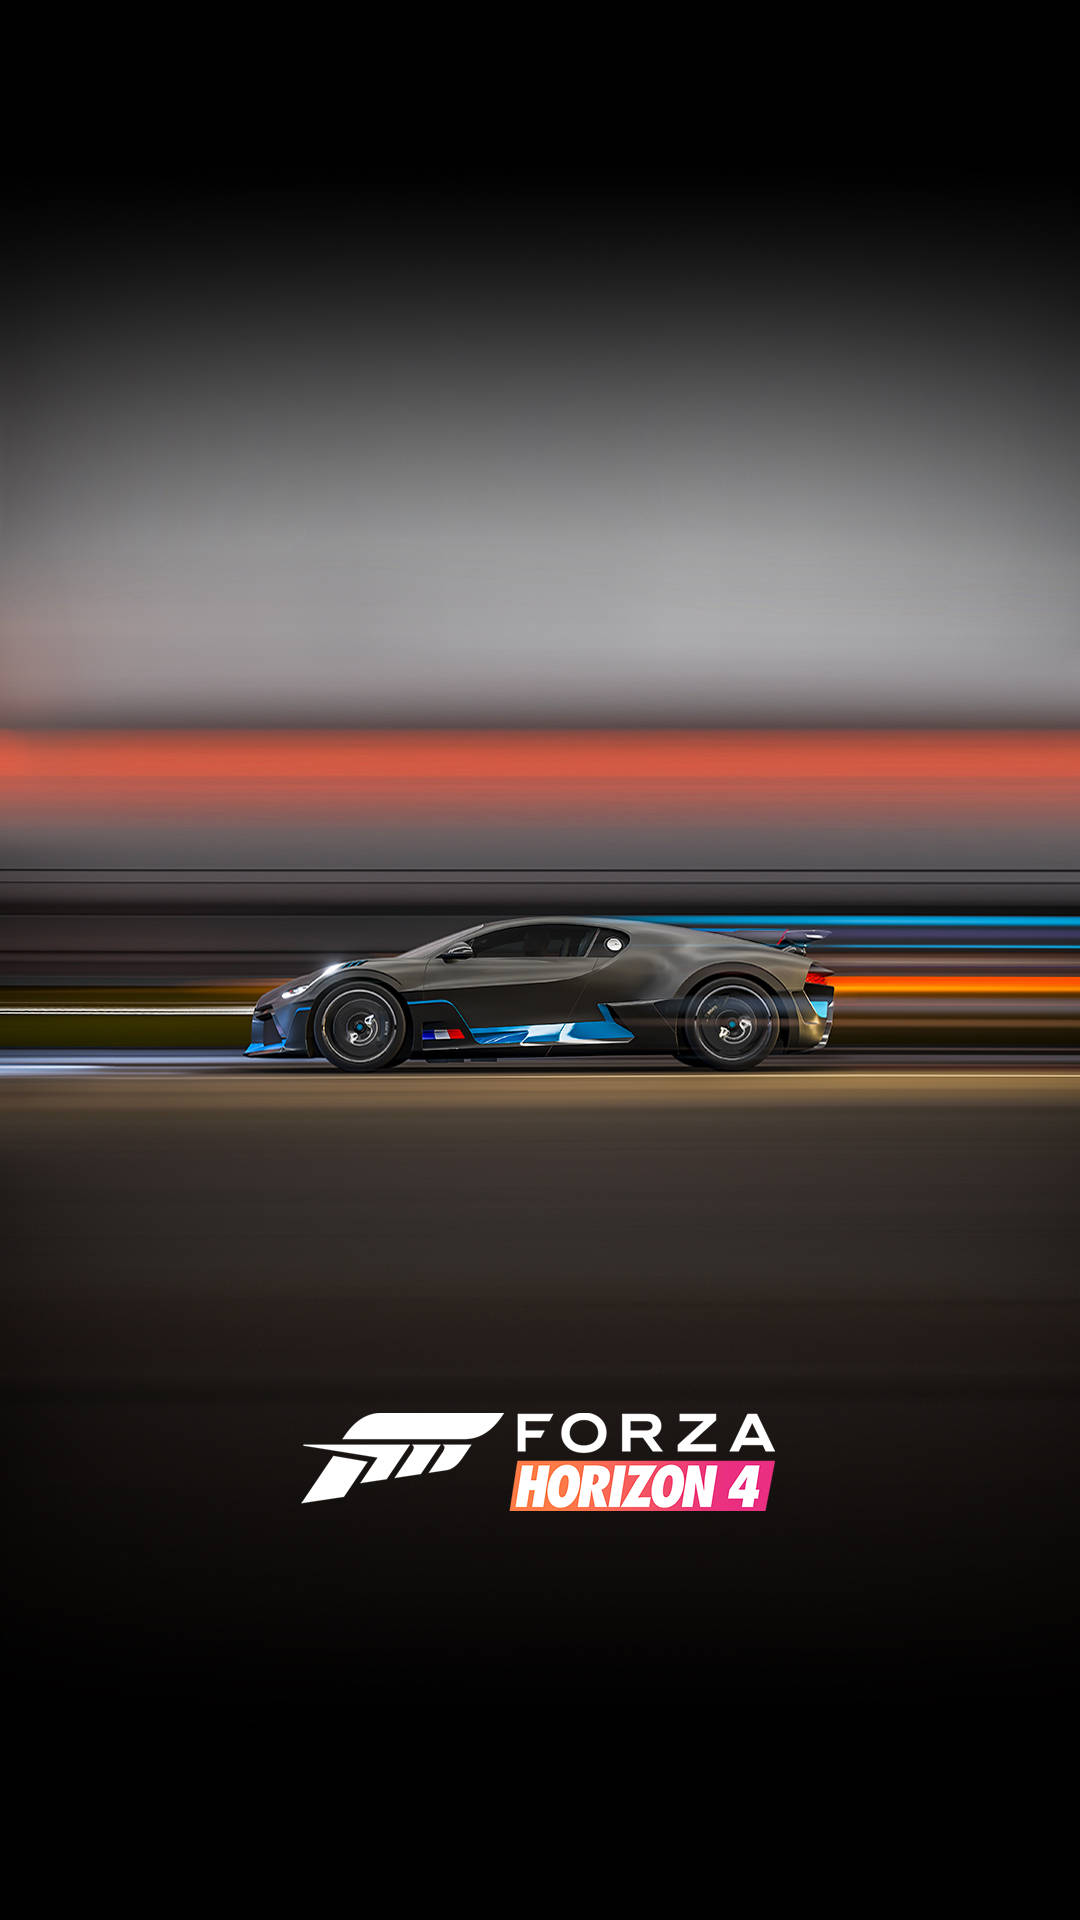 Captivating Forza Racing Game Iphone Wallpaper